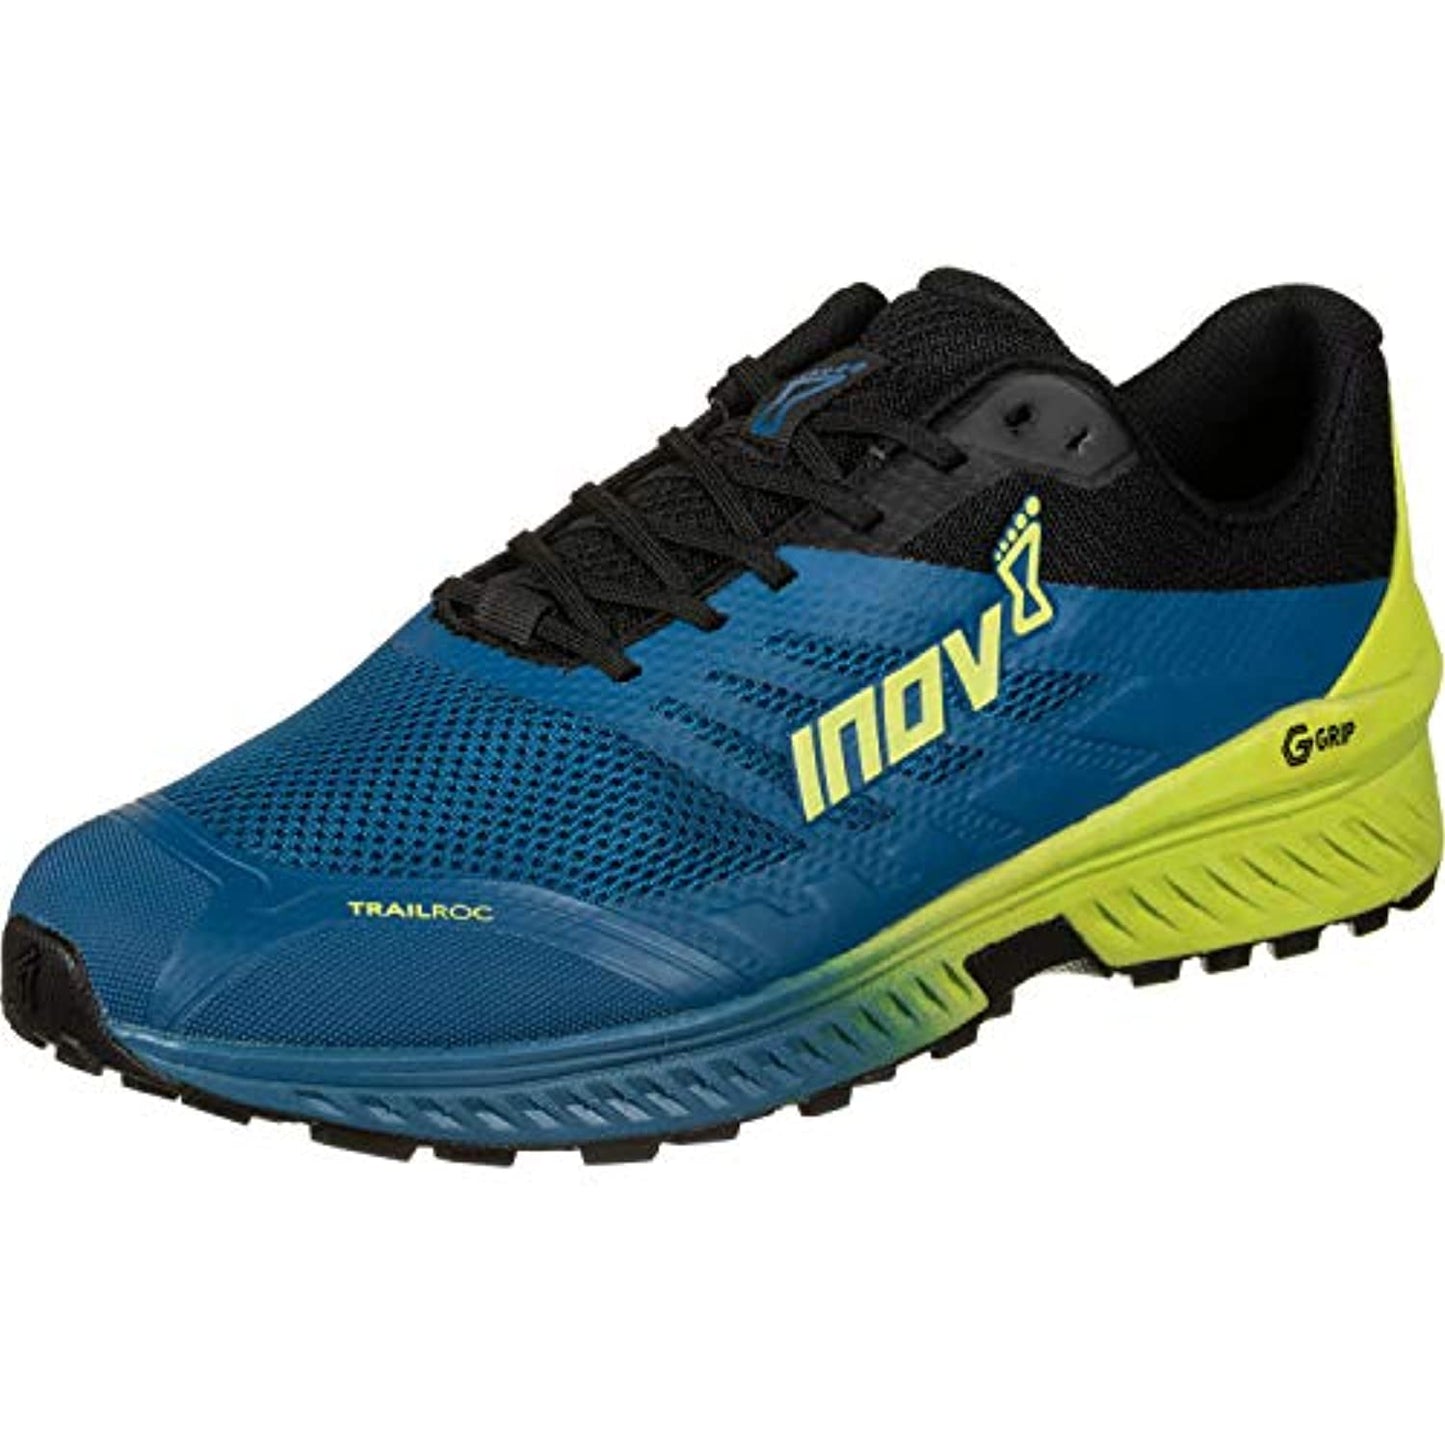 Inov-8 Women's Trailroc G 280 - Trail Running Shoes - Blue/Black